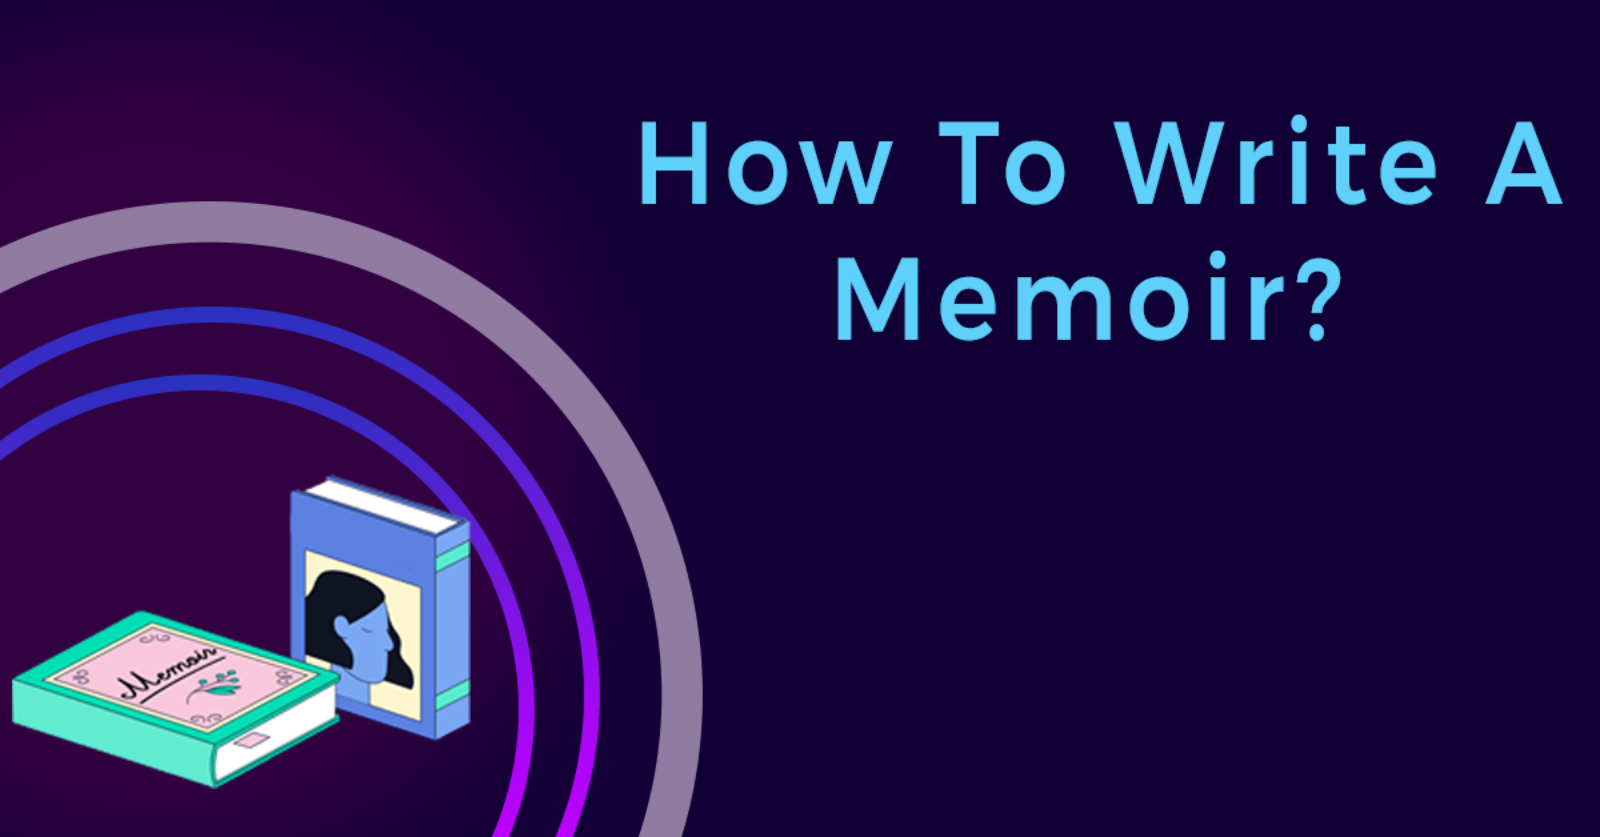 How To Write A Memoir?